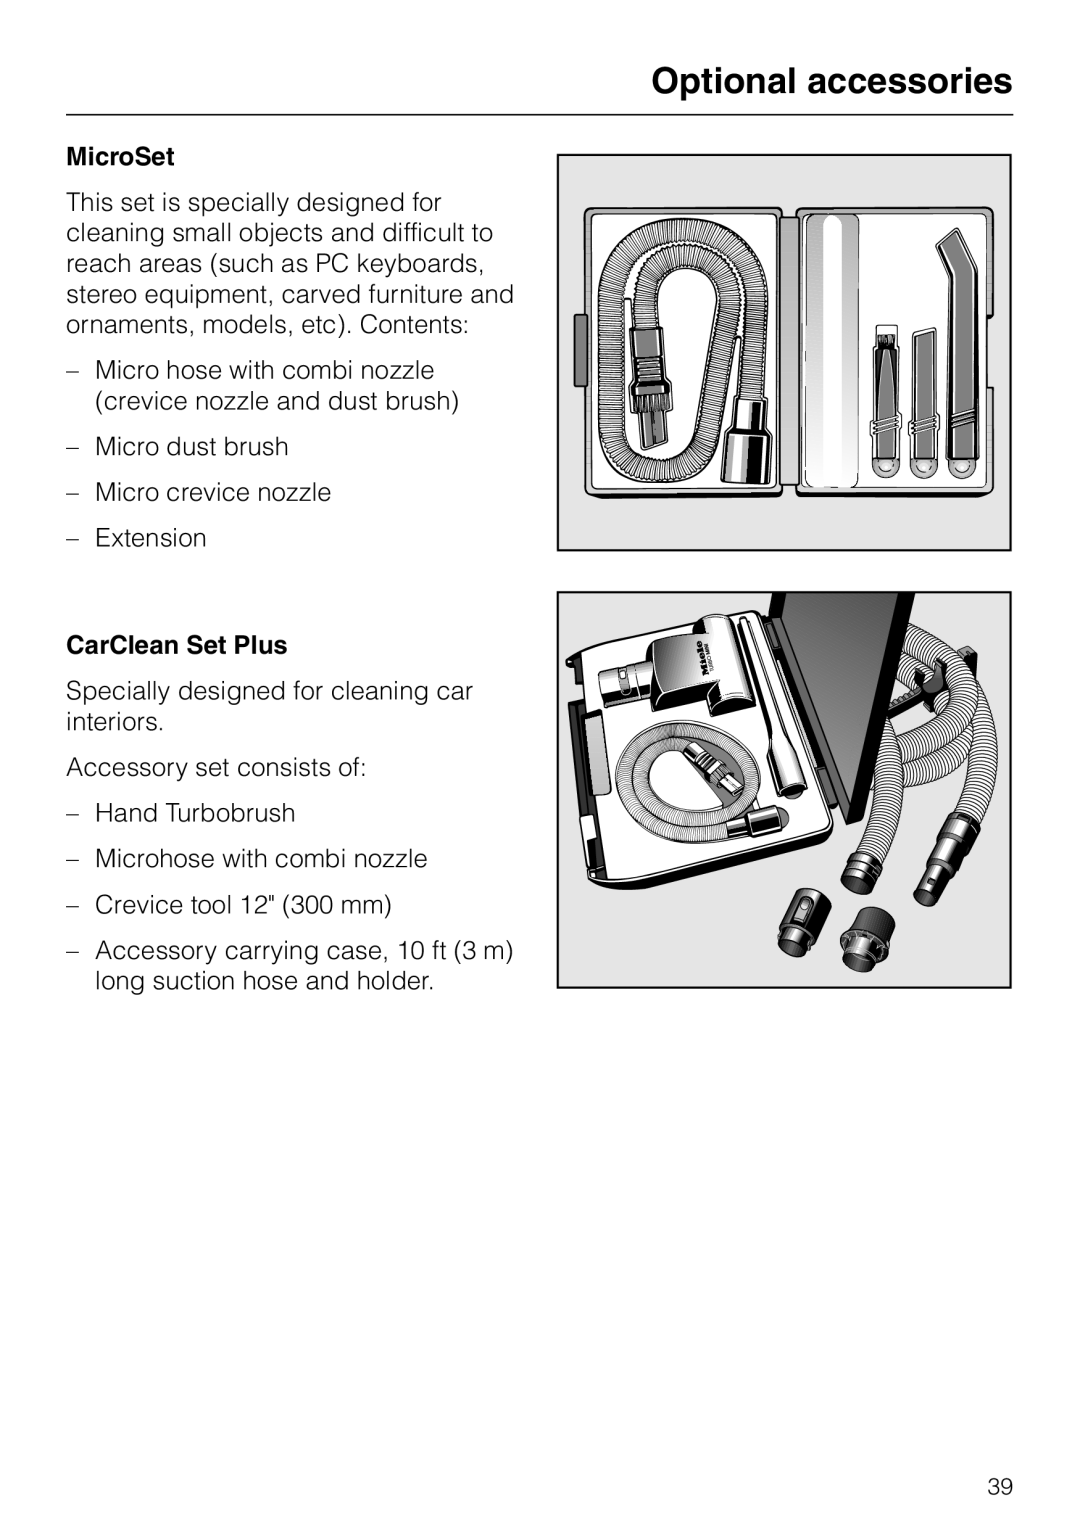 Miele S 4000 manual Optional accessories, MicroSet, CarClean Set Plus 